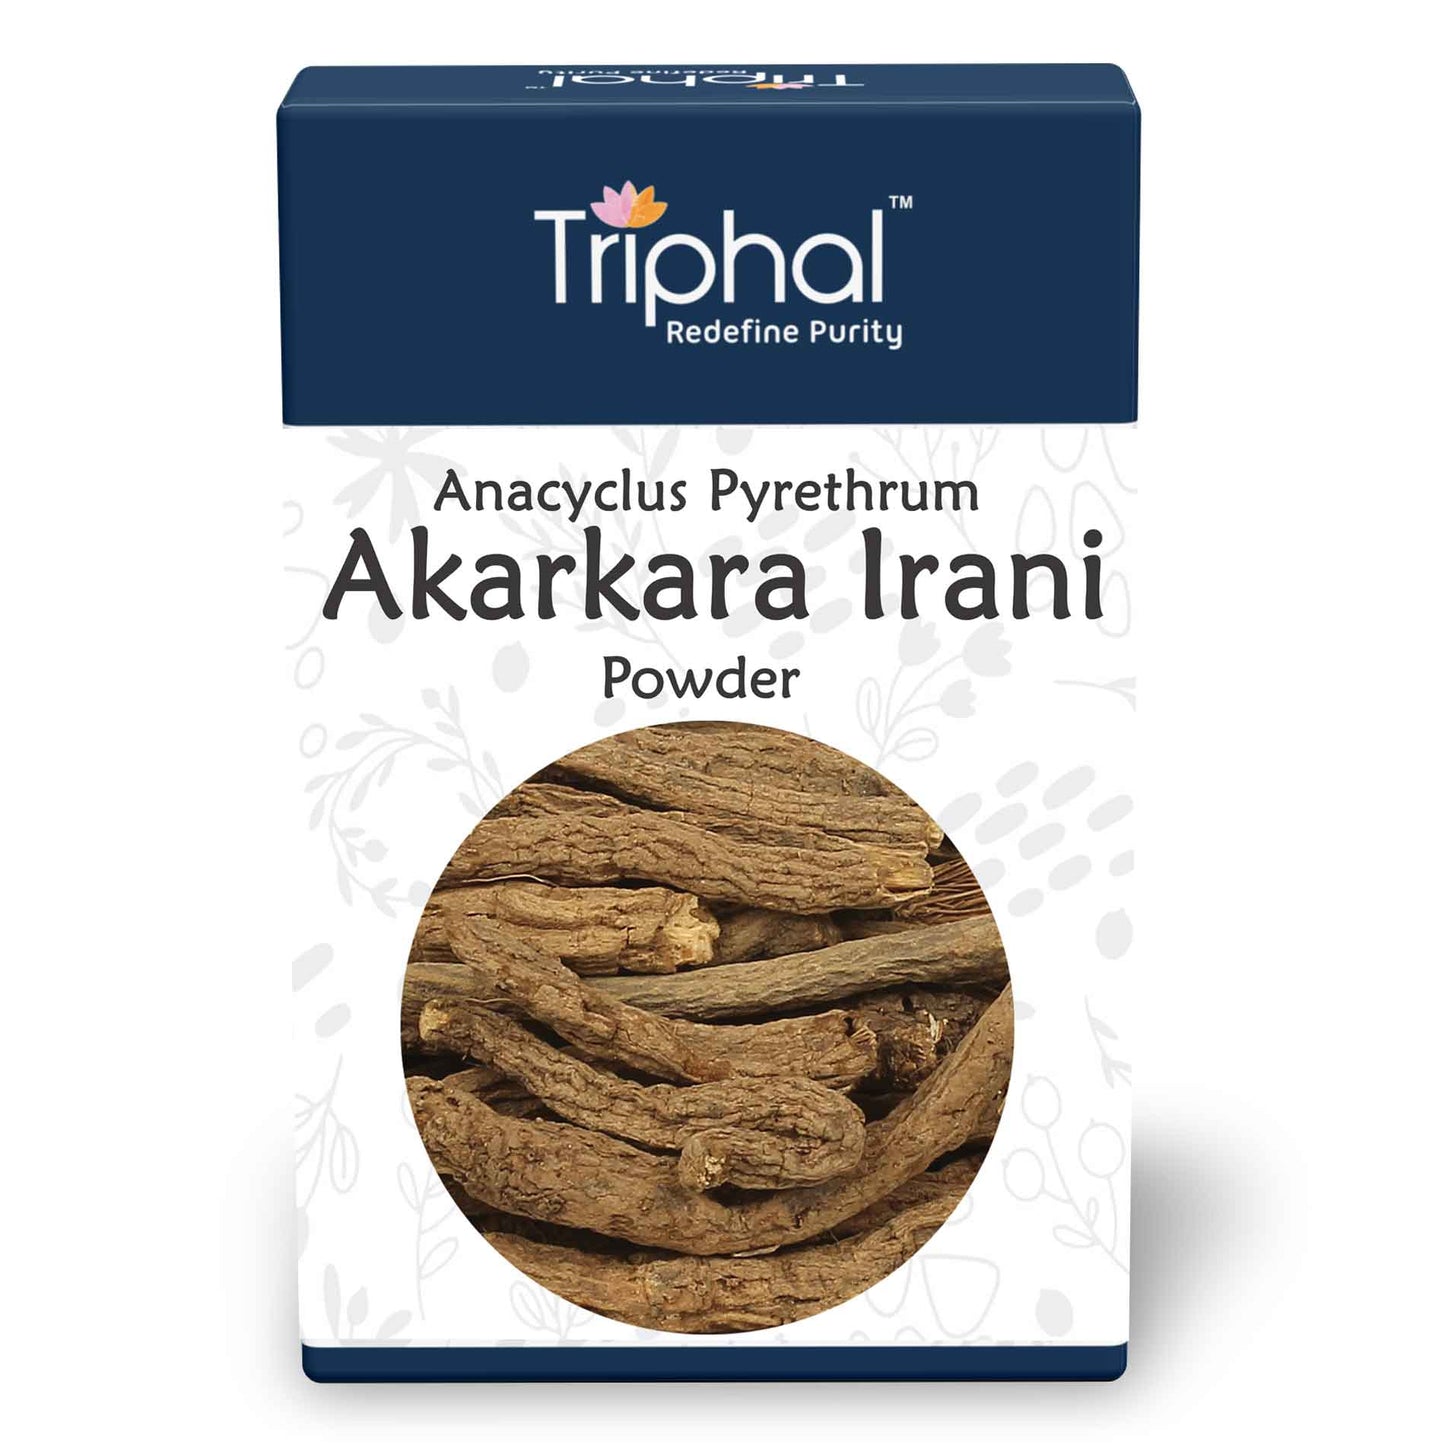 Box of Akarkara Irani Powder - Pellitory Root Powder by Triphal Brand - 100% Pure and Original Aqarqara Powder